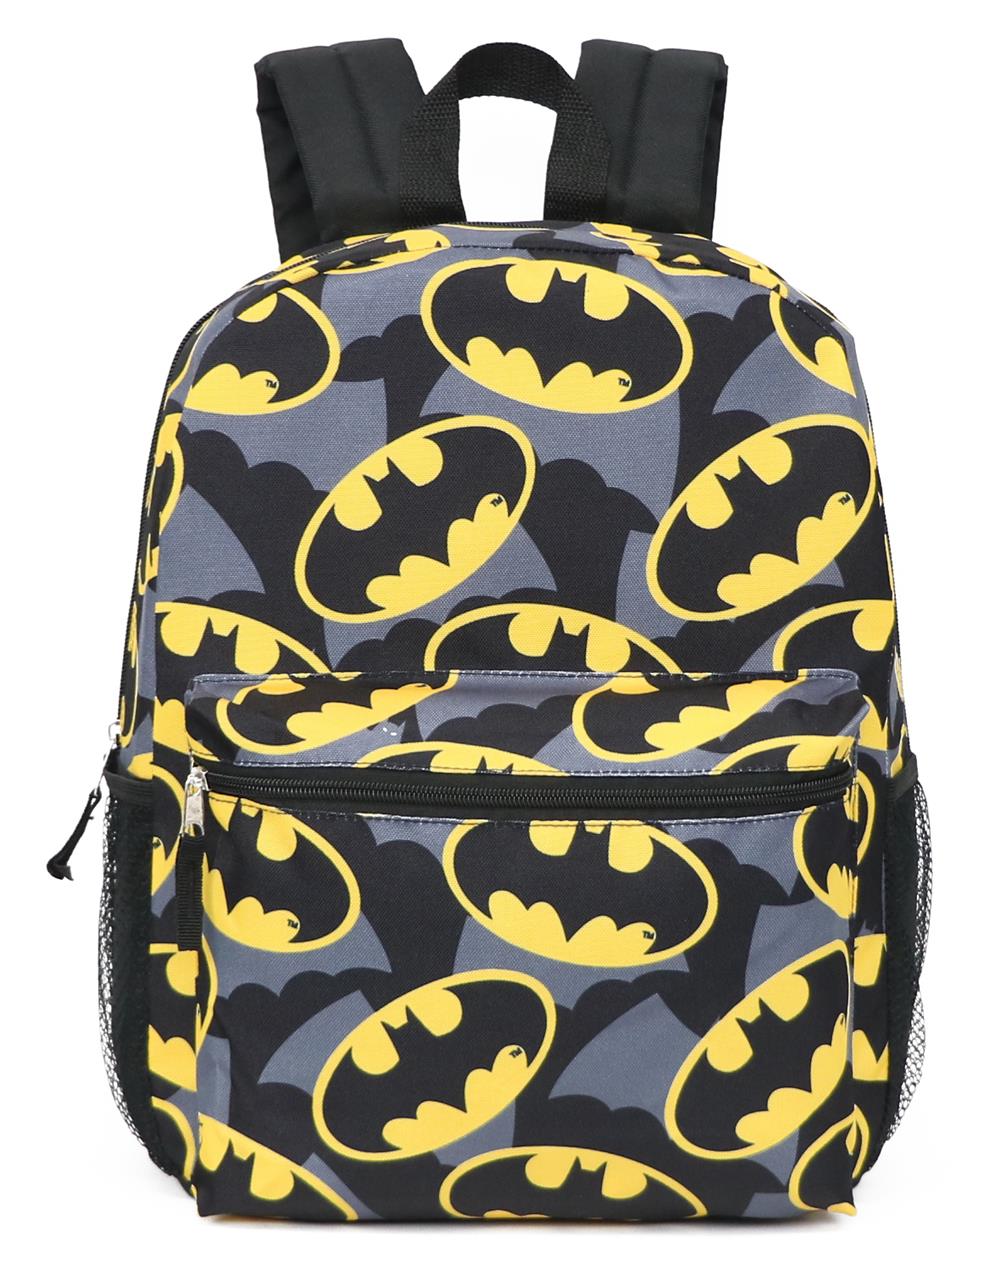 Batman Full Size All Over Print Backpack